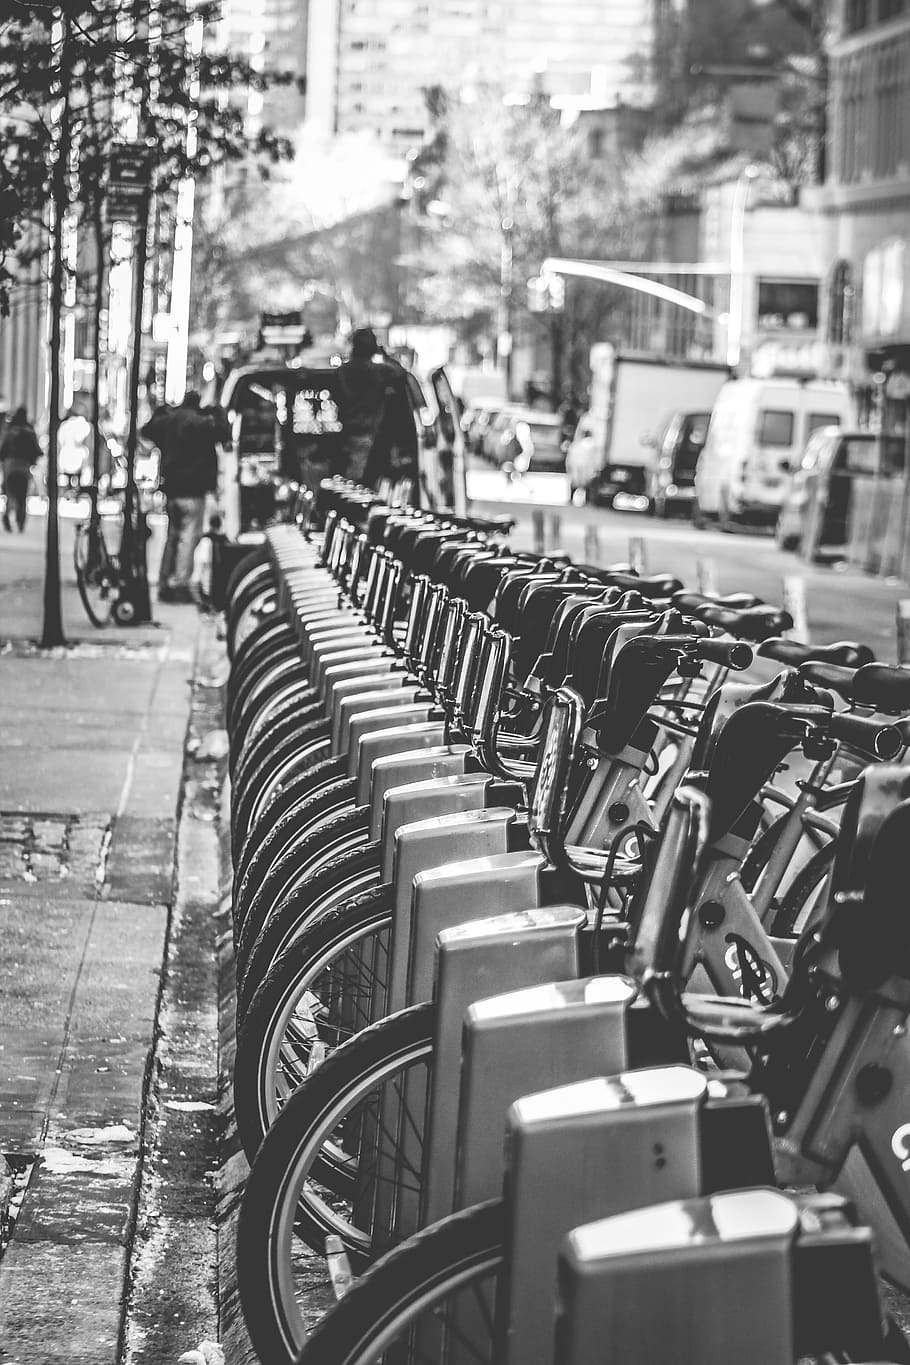 sepeda, kota, jalan-jalan, hitam dan putih, NYC, New York, moda transportasi, jalan, transportasi, arsitektur